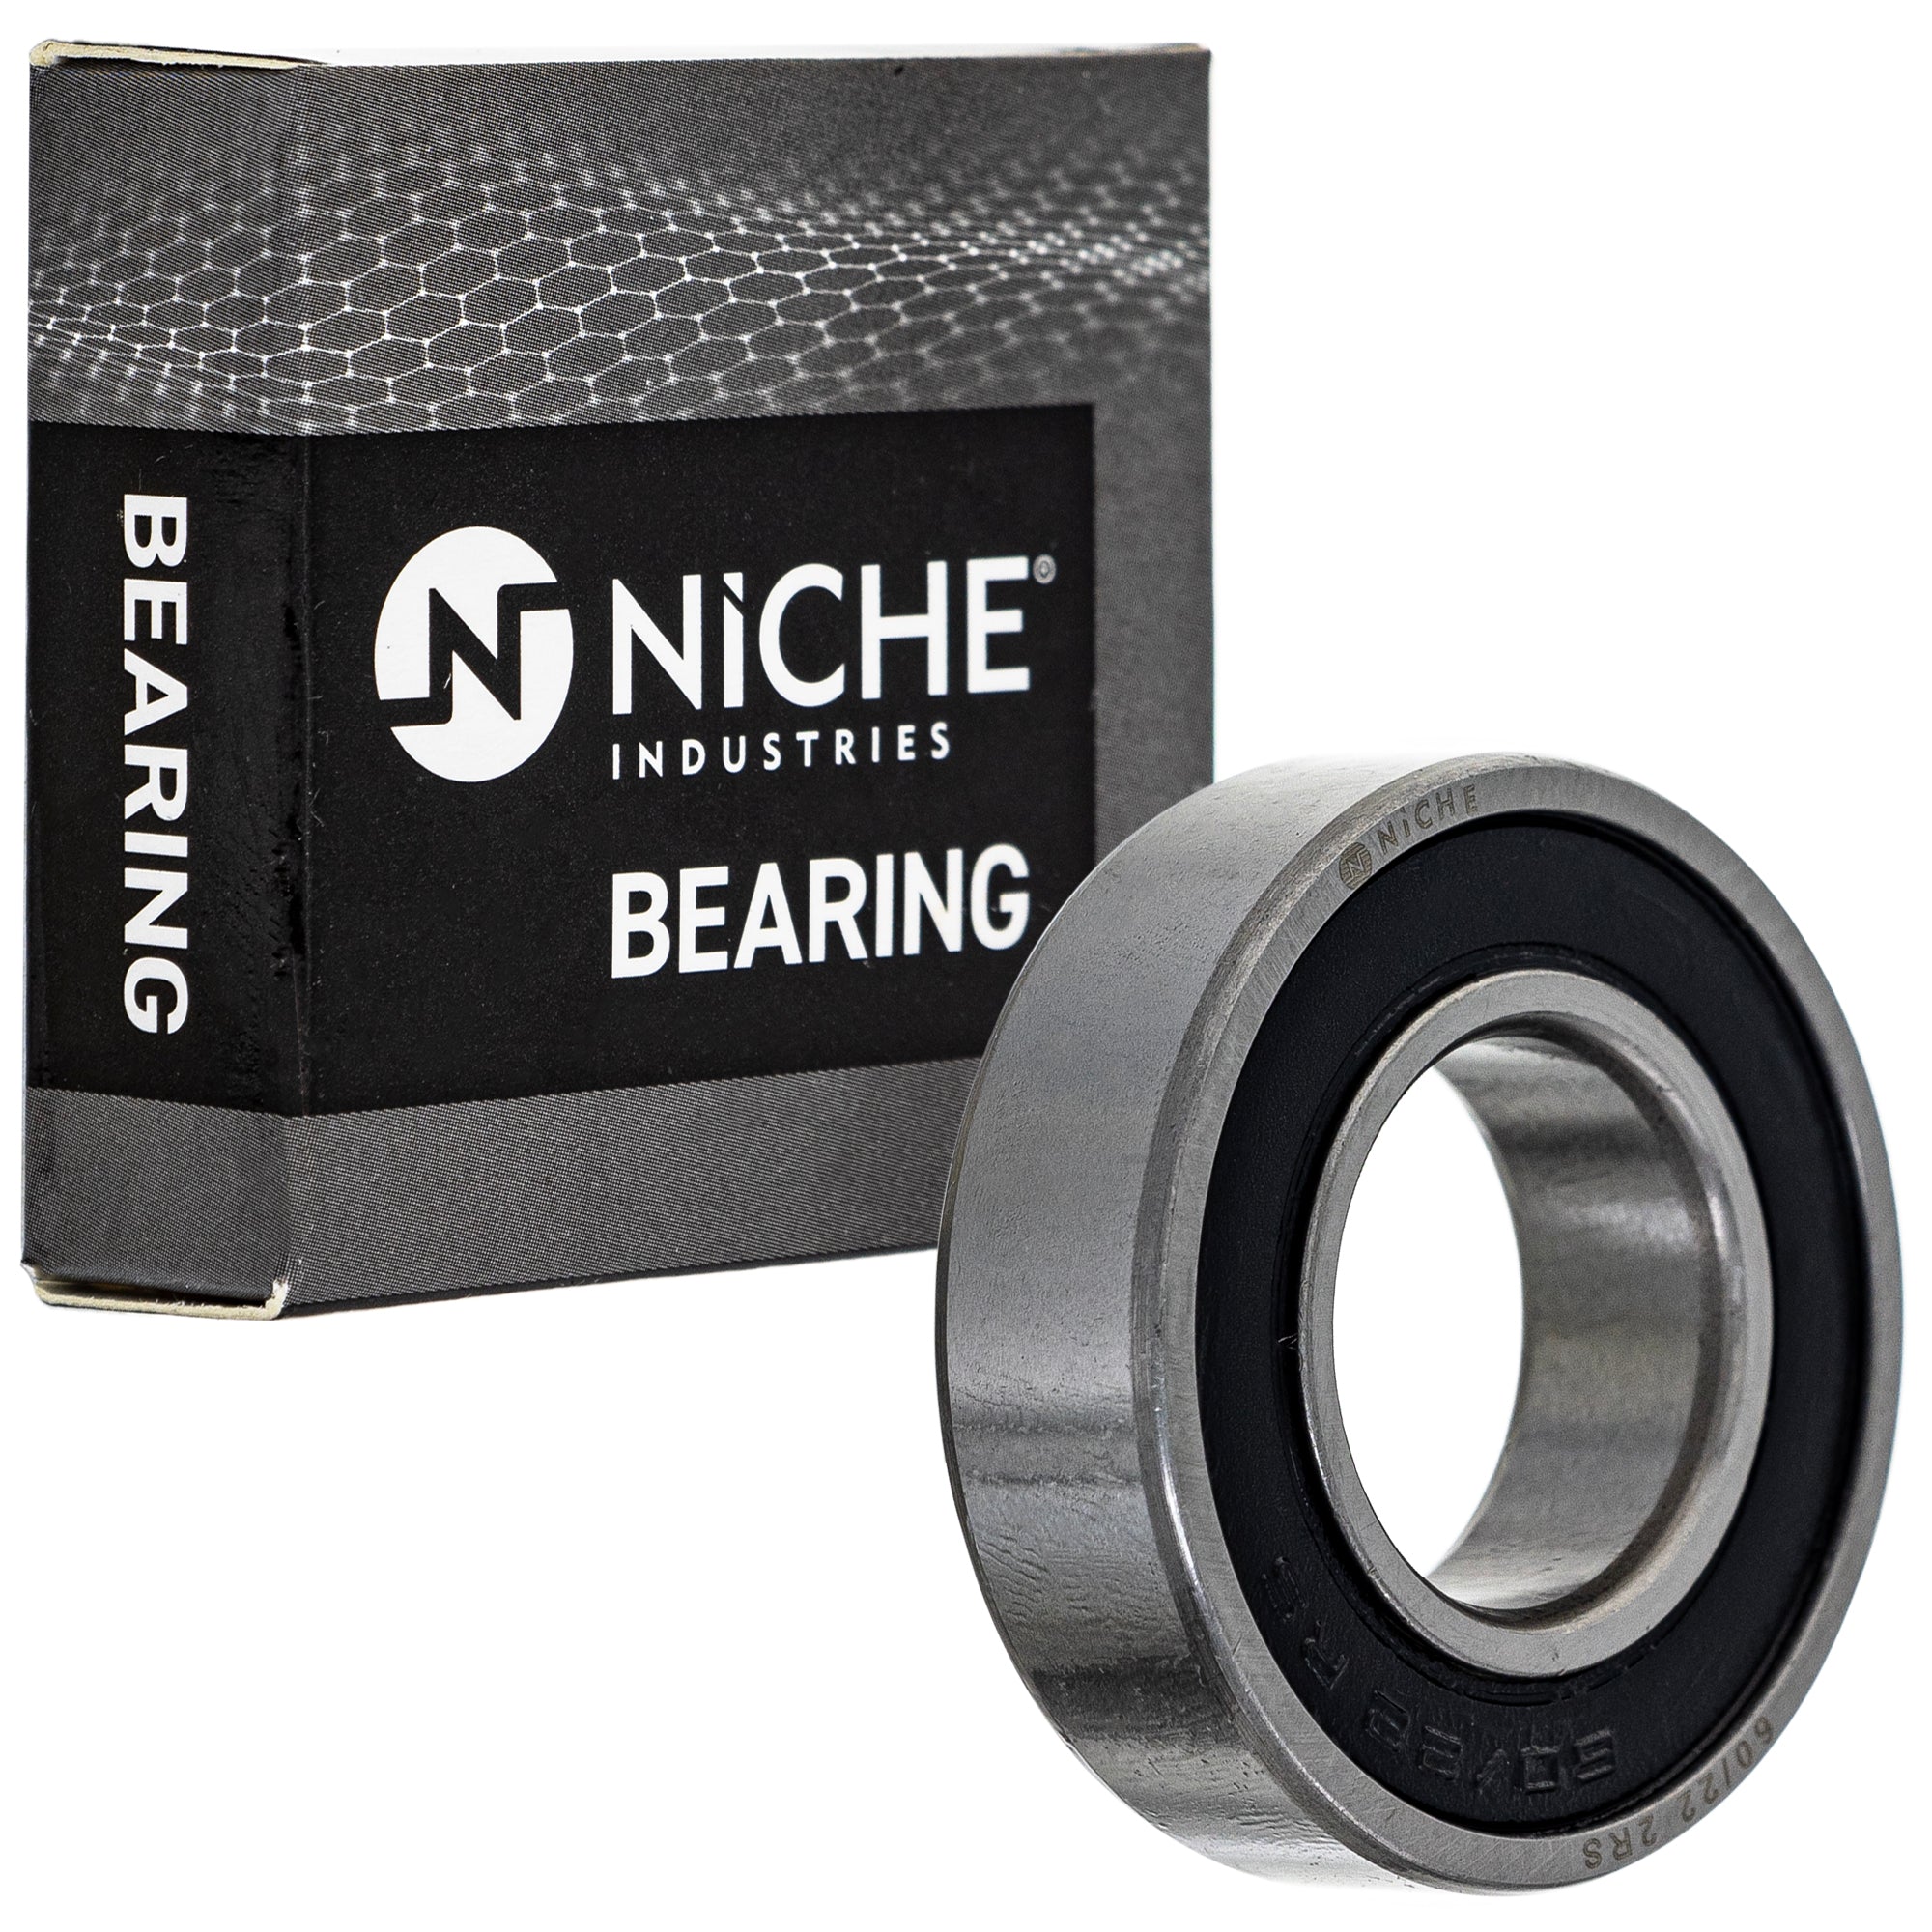 NICHE 519-CBB2267R Bearing for zOTHER Z1000 YZF YZ450FX YZ450F